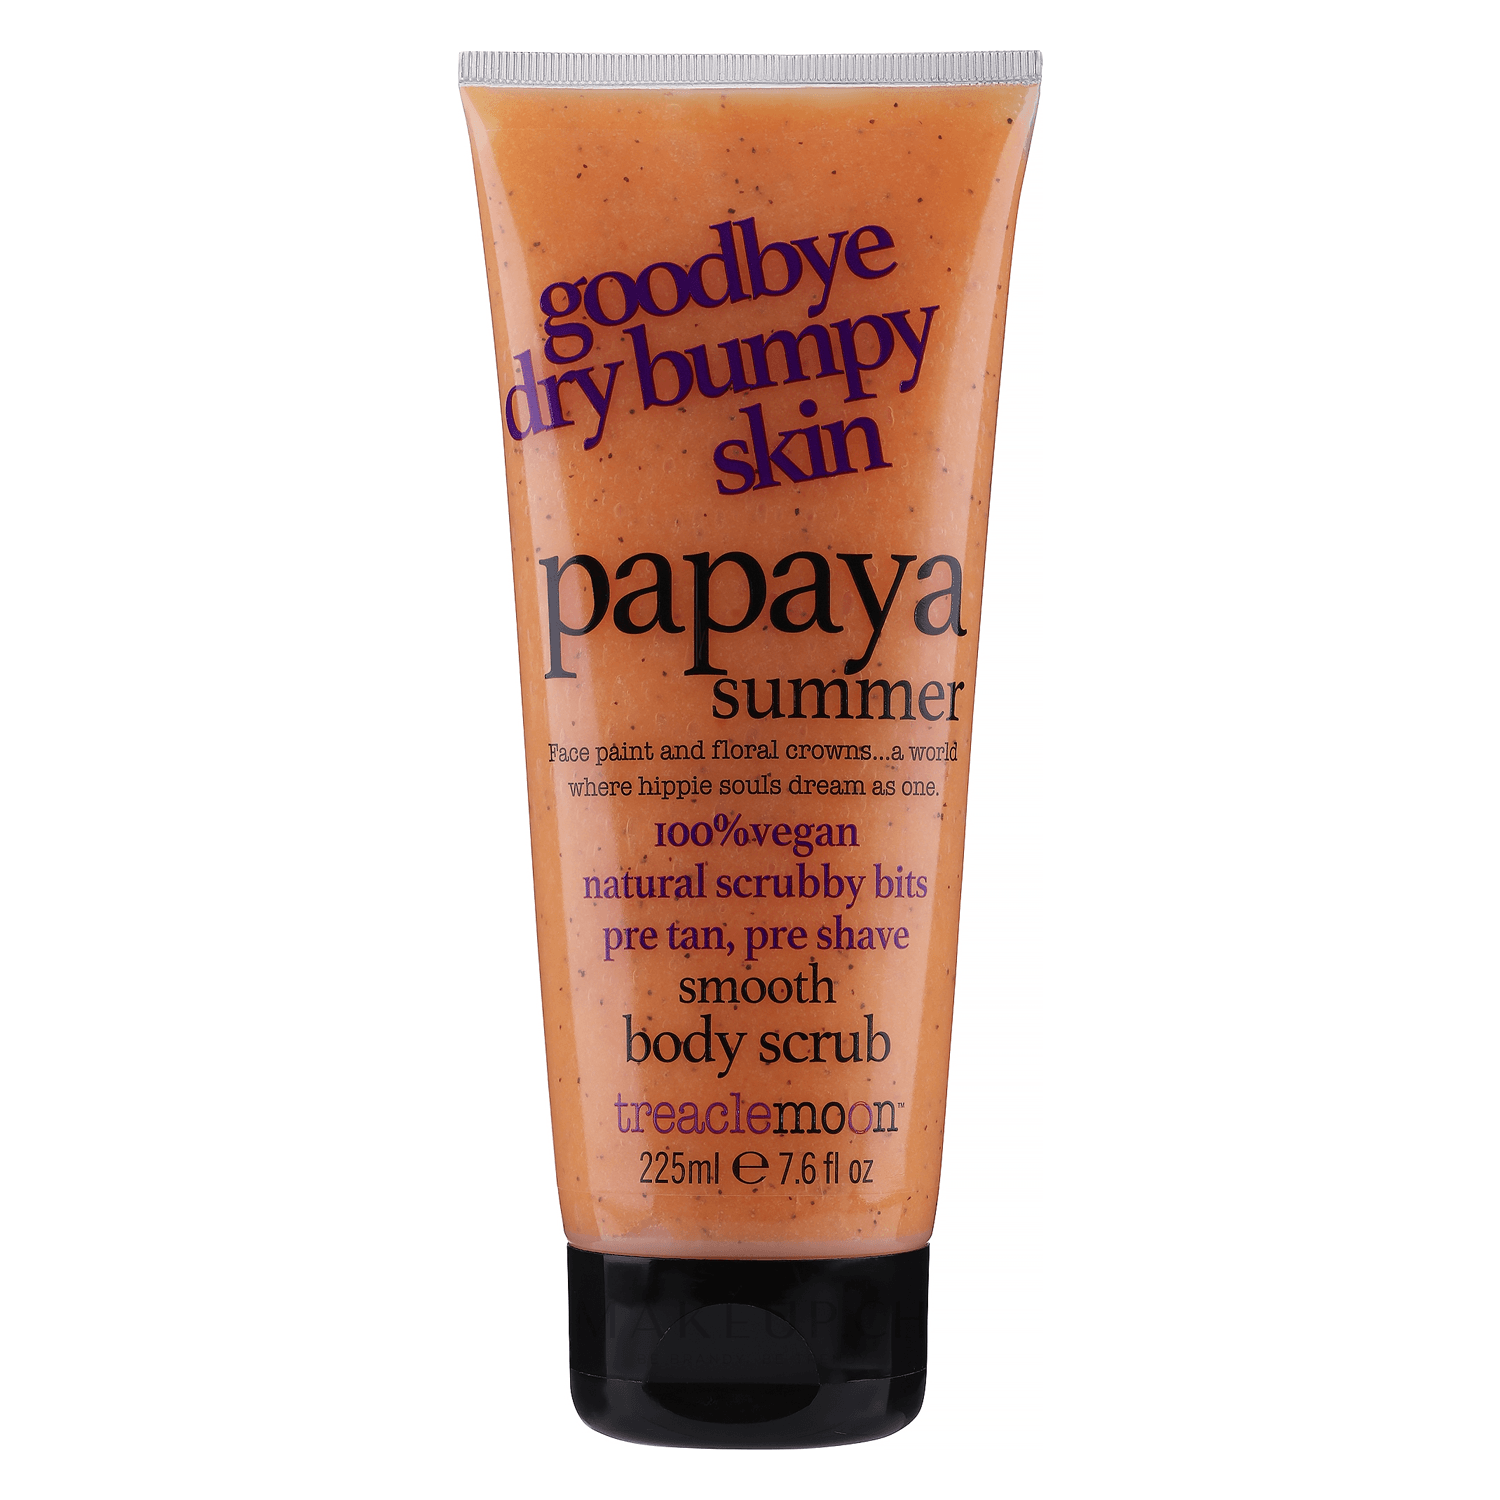 Produktbild von treaclemoon - papaya summer body scrub